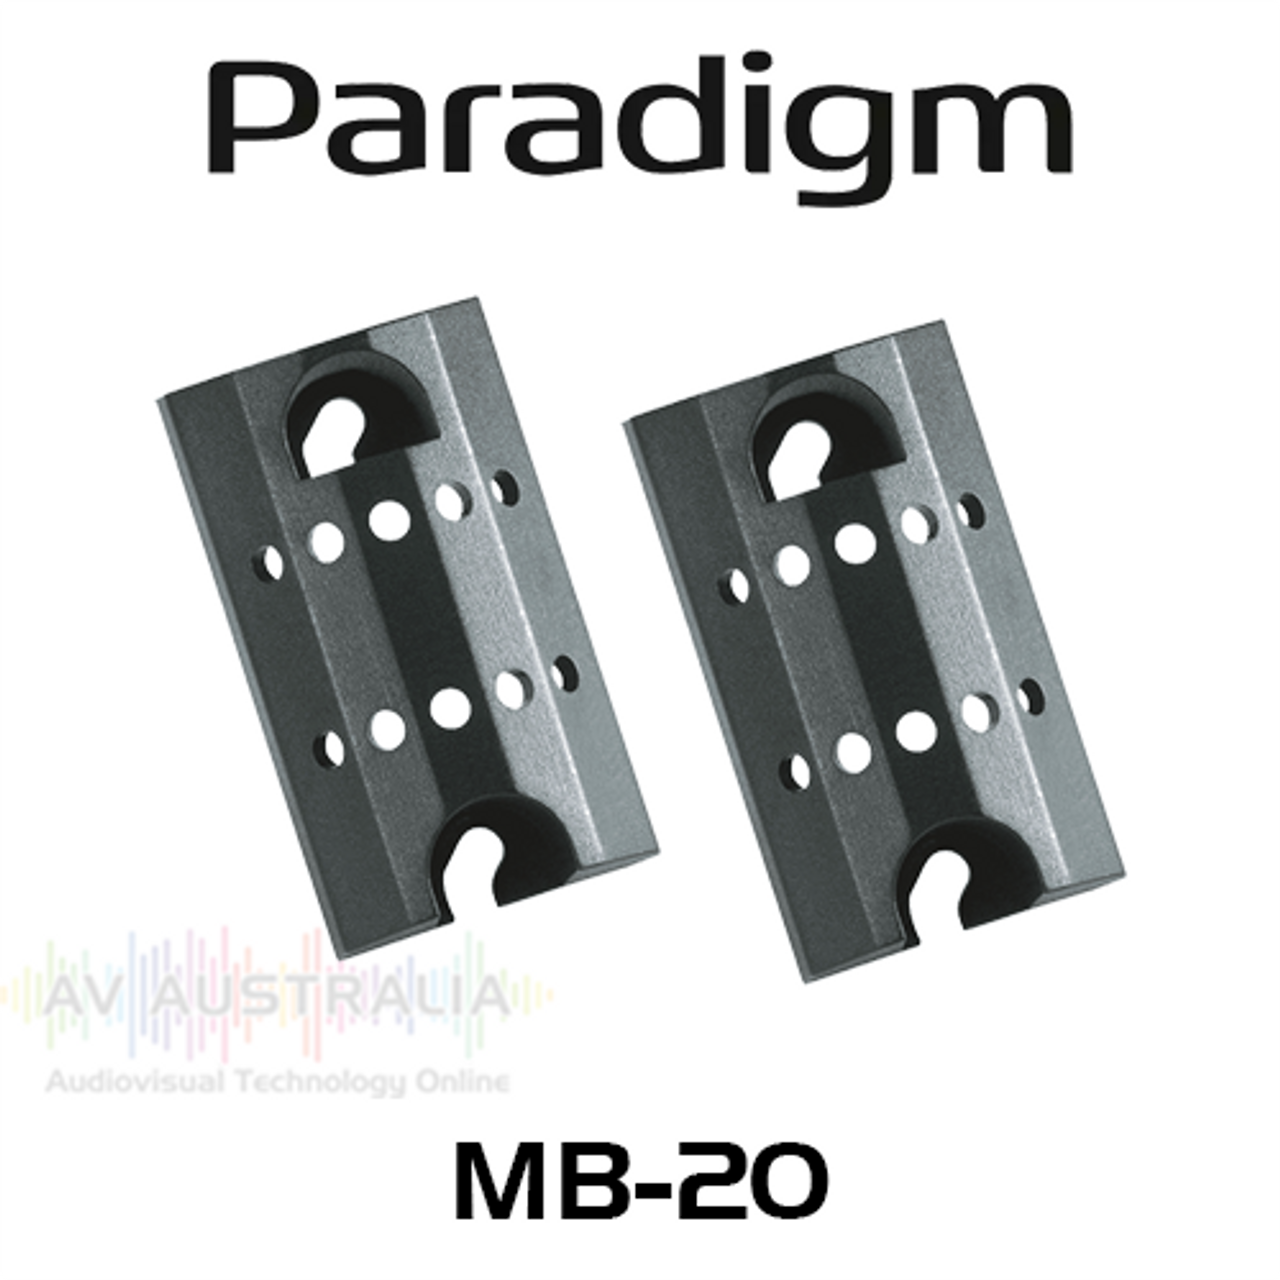 Paradigm M20 Wall Mount Brackets (Pair)